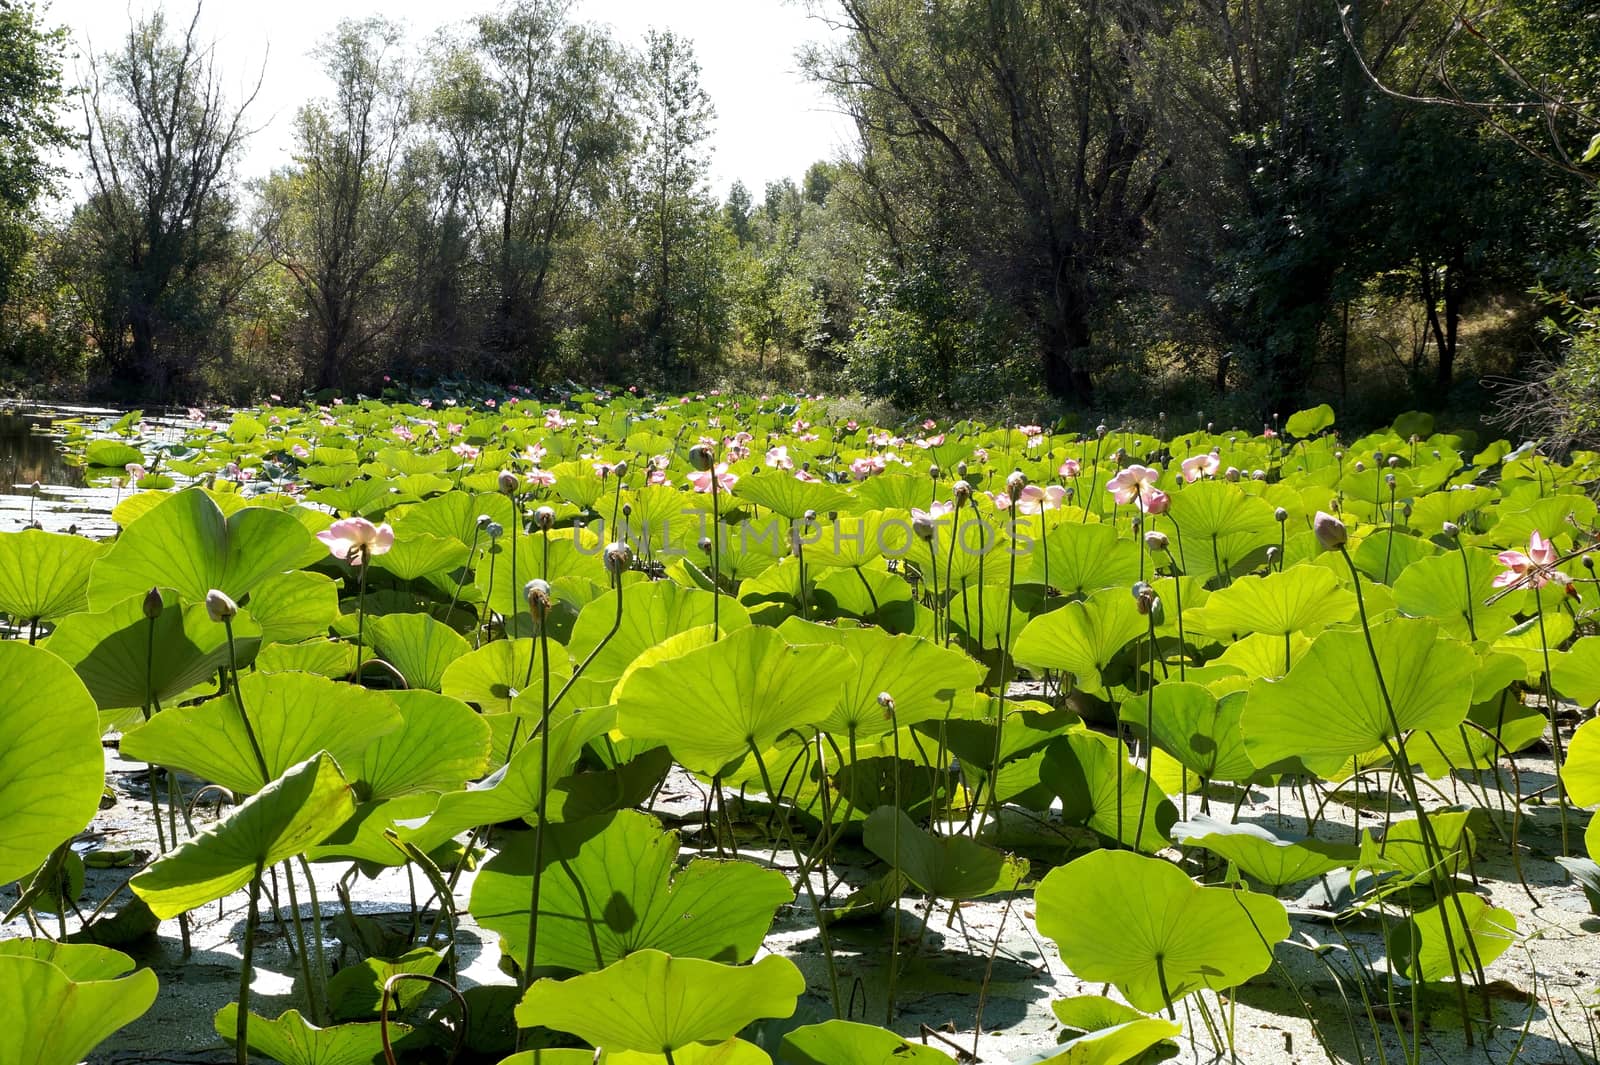 Lotuses in a flood plain of the Volga River in the Volgograd region in Russia